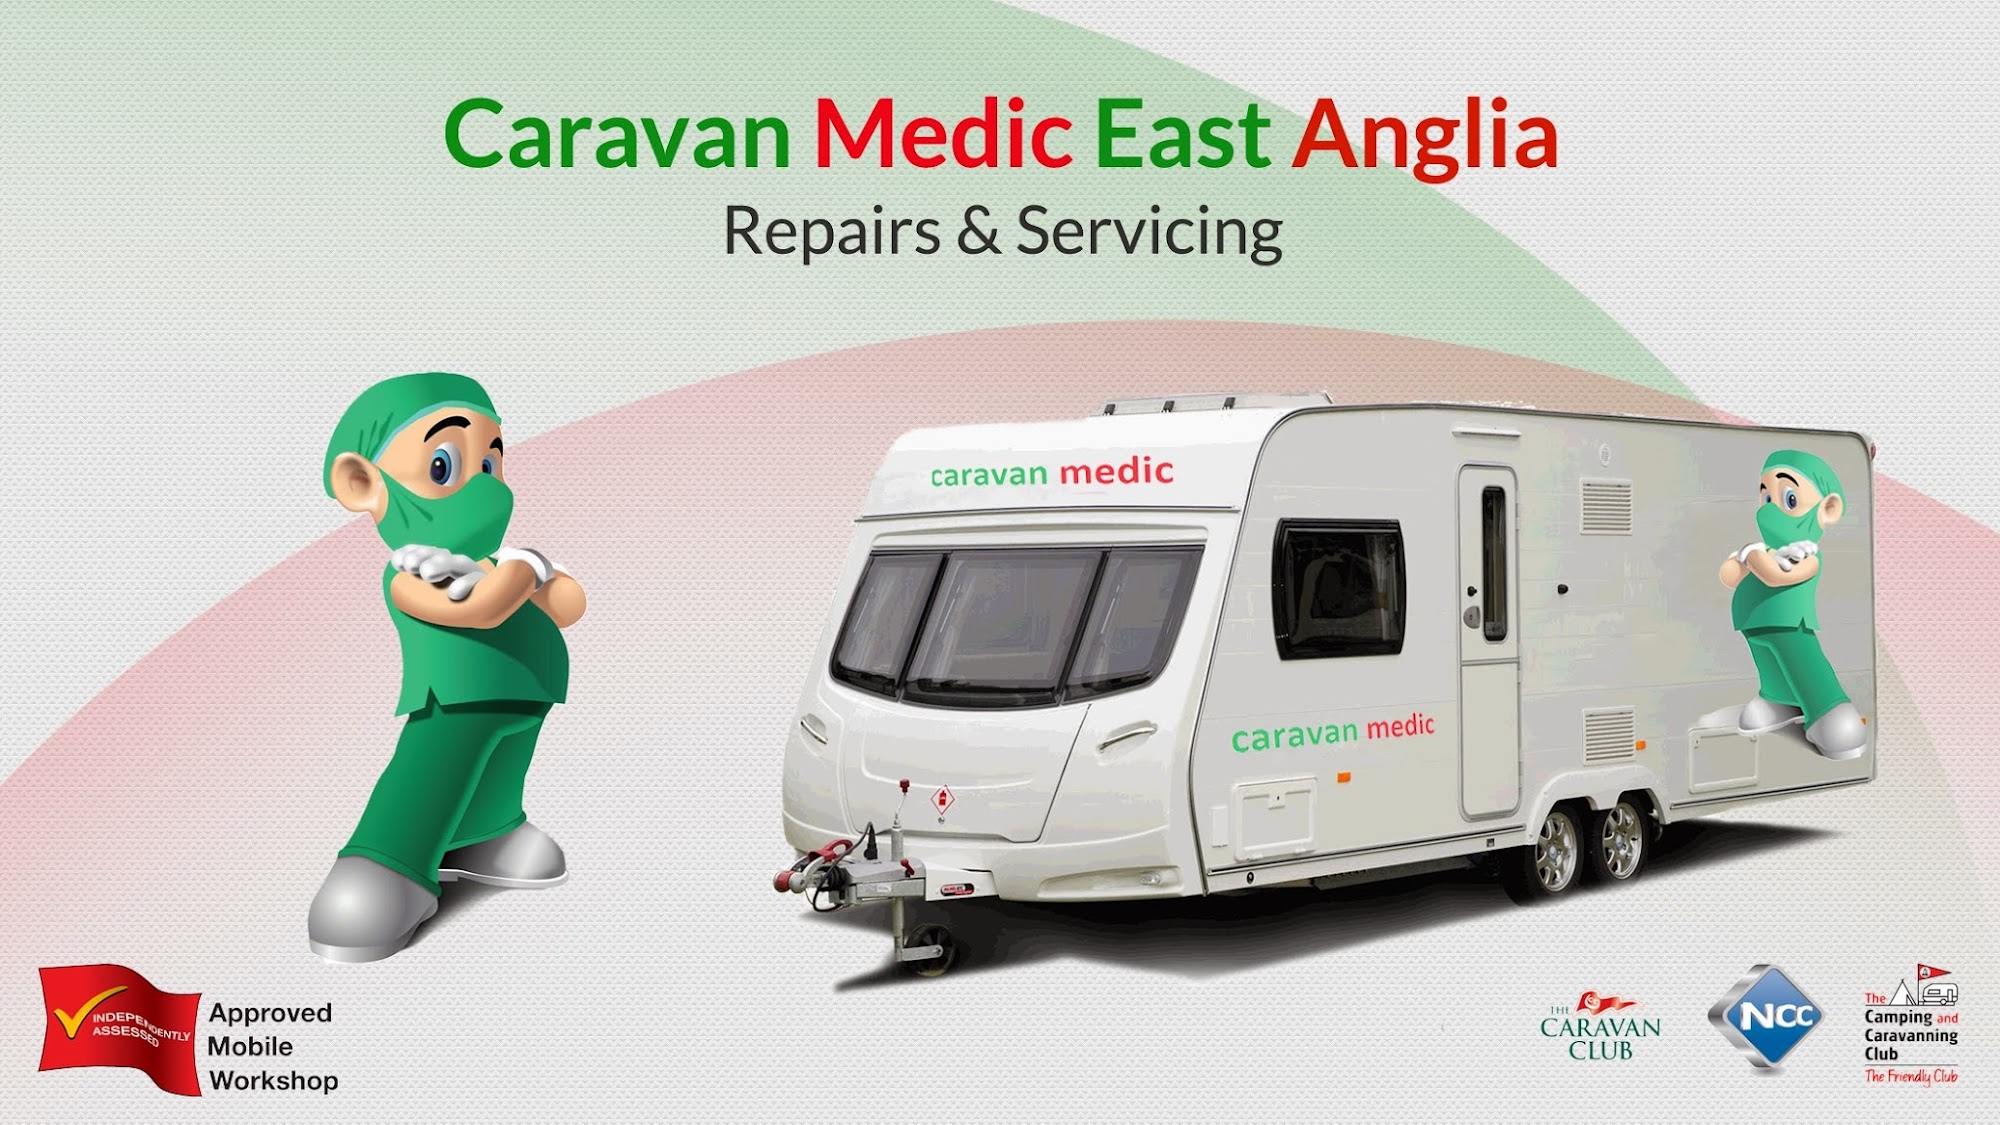 Caravan Medic East Anglia